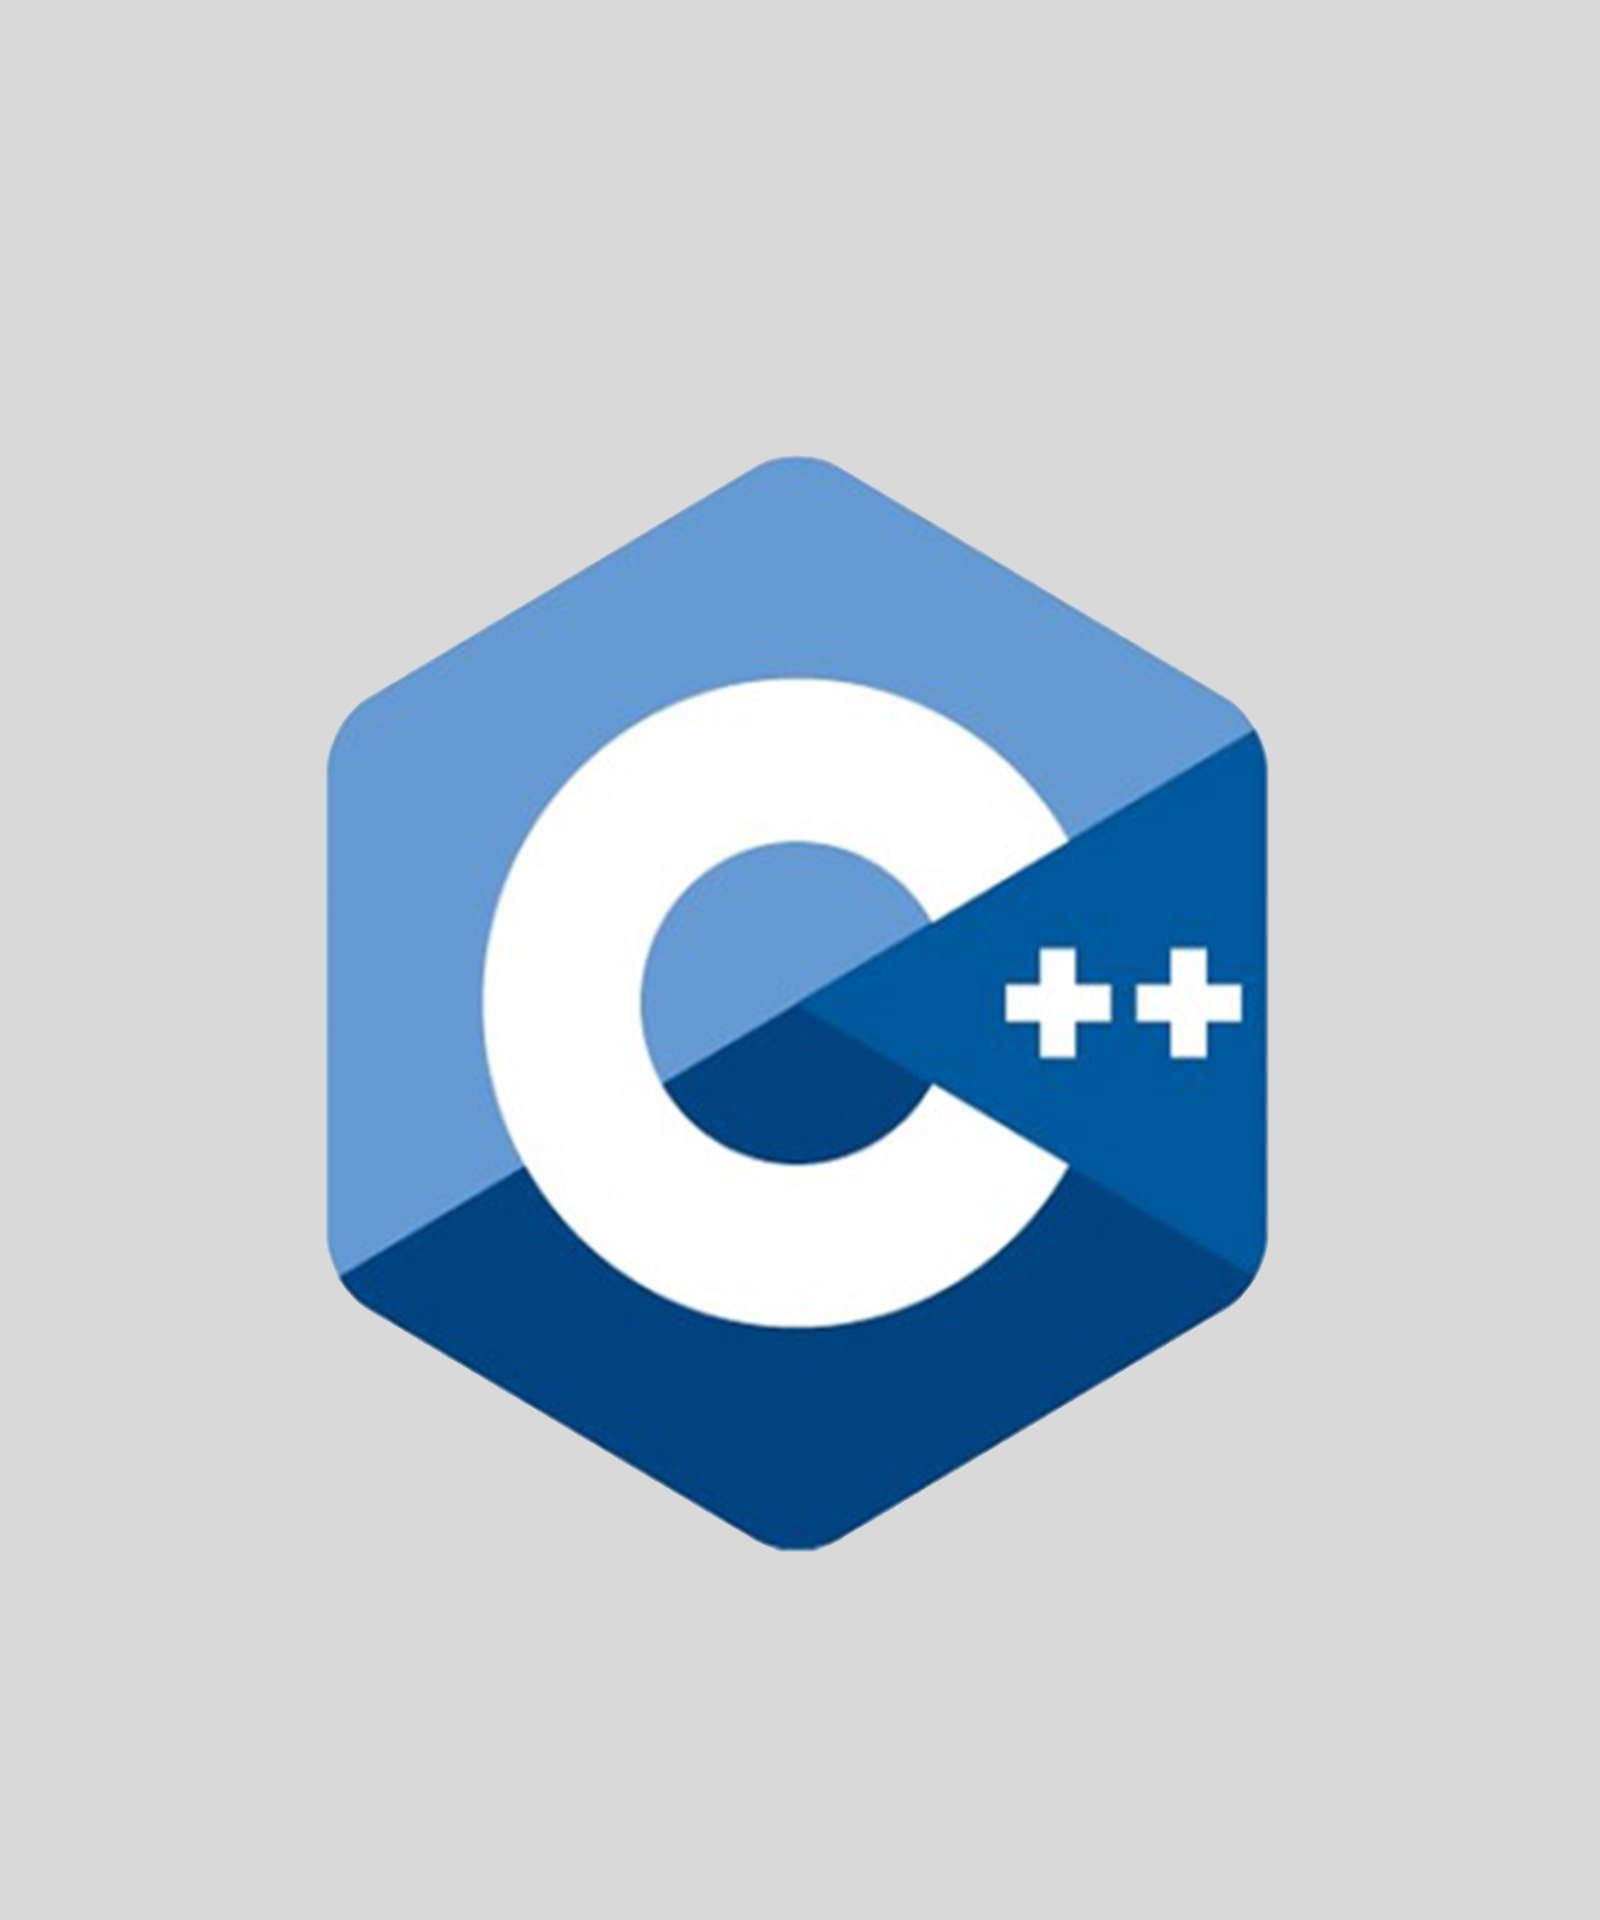 c++ programlama dili